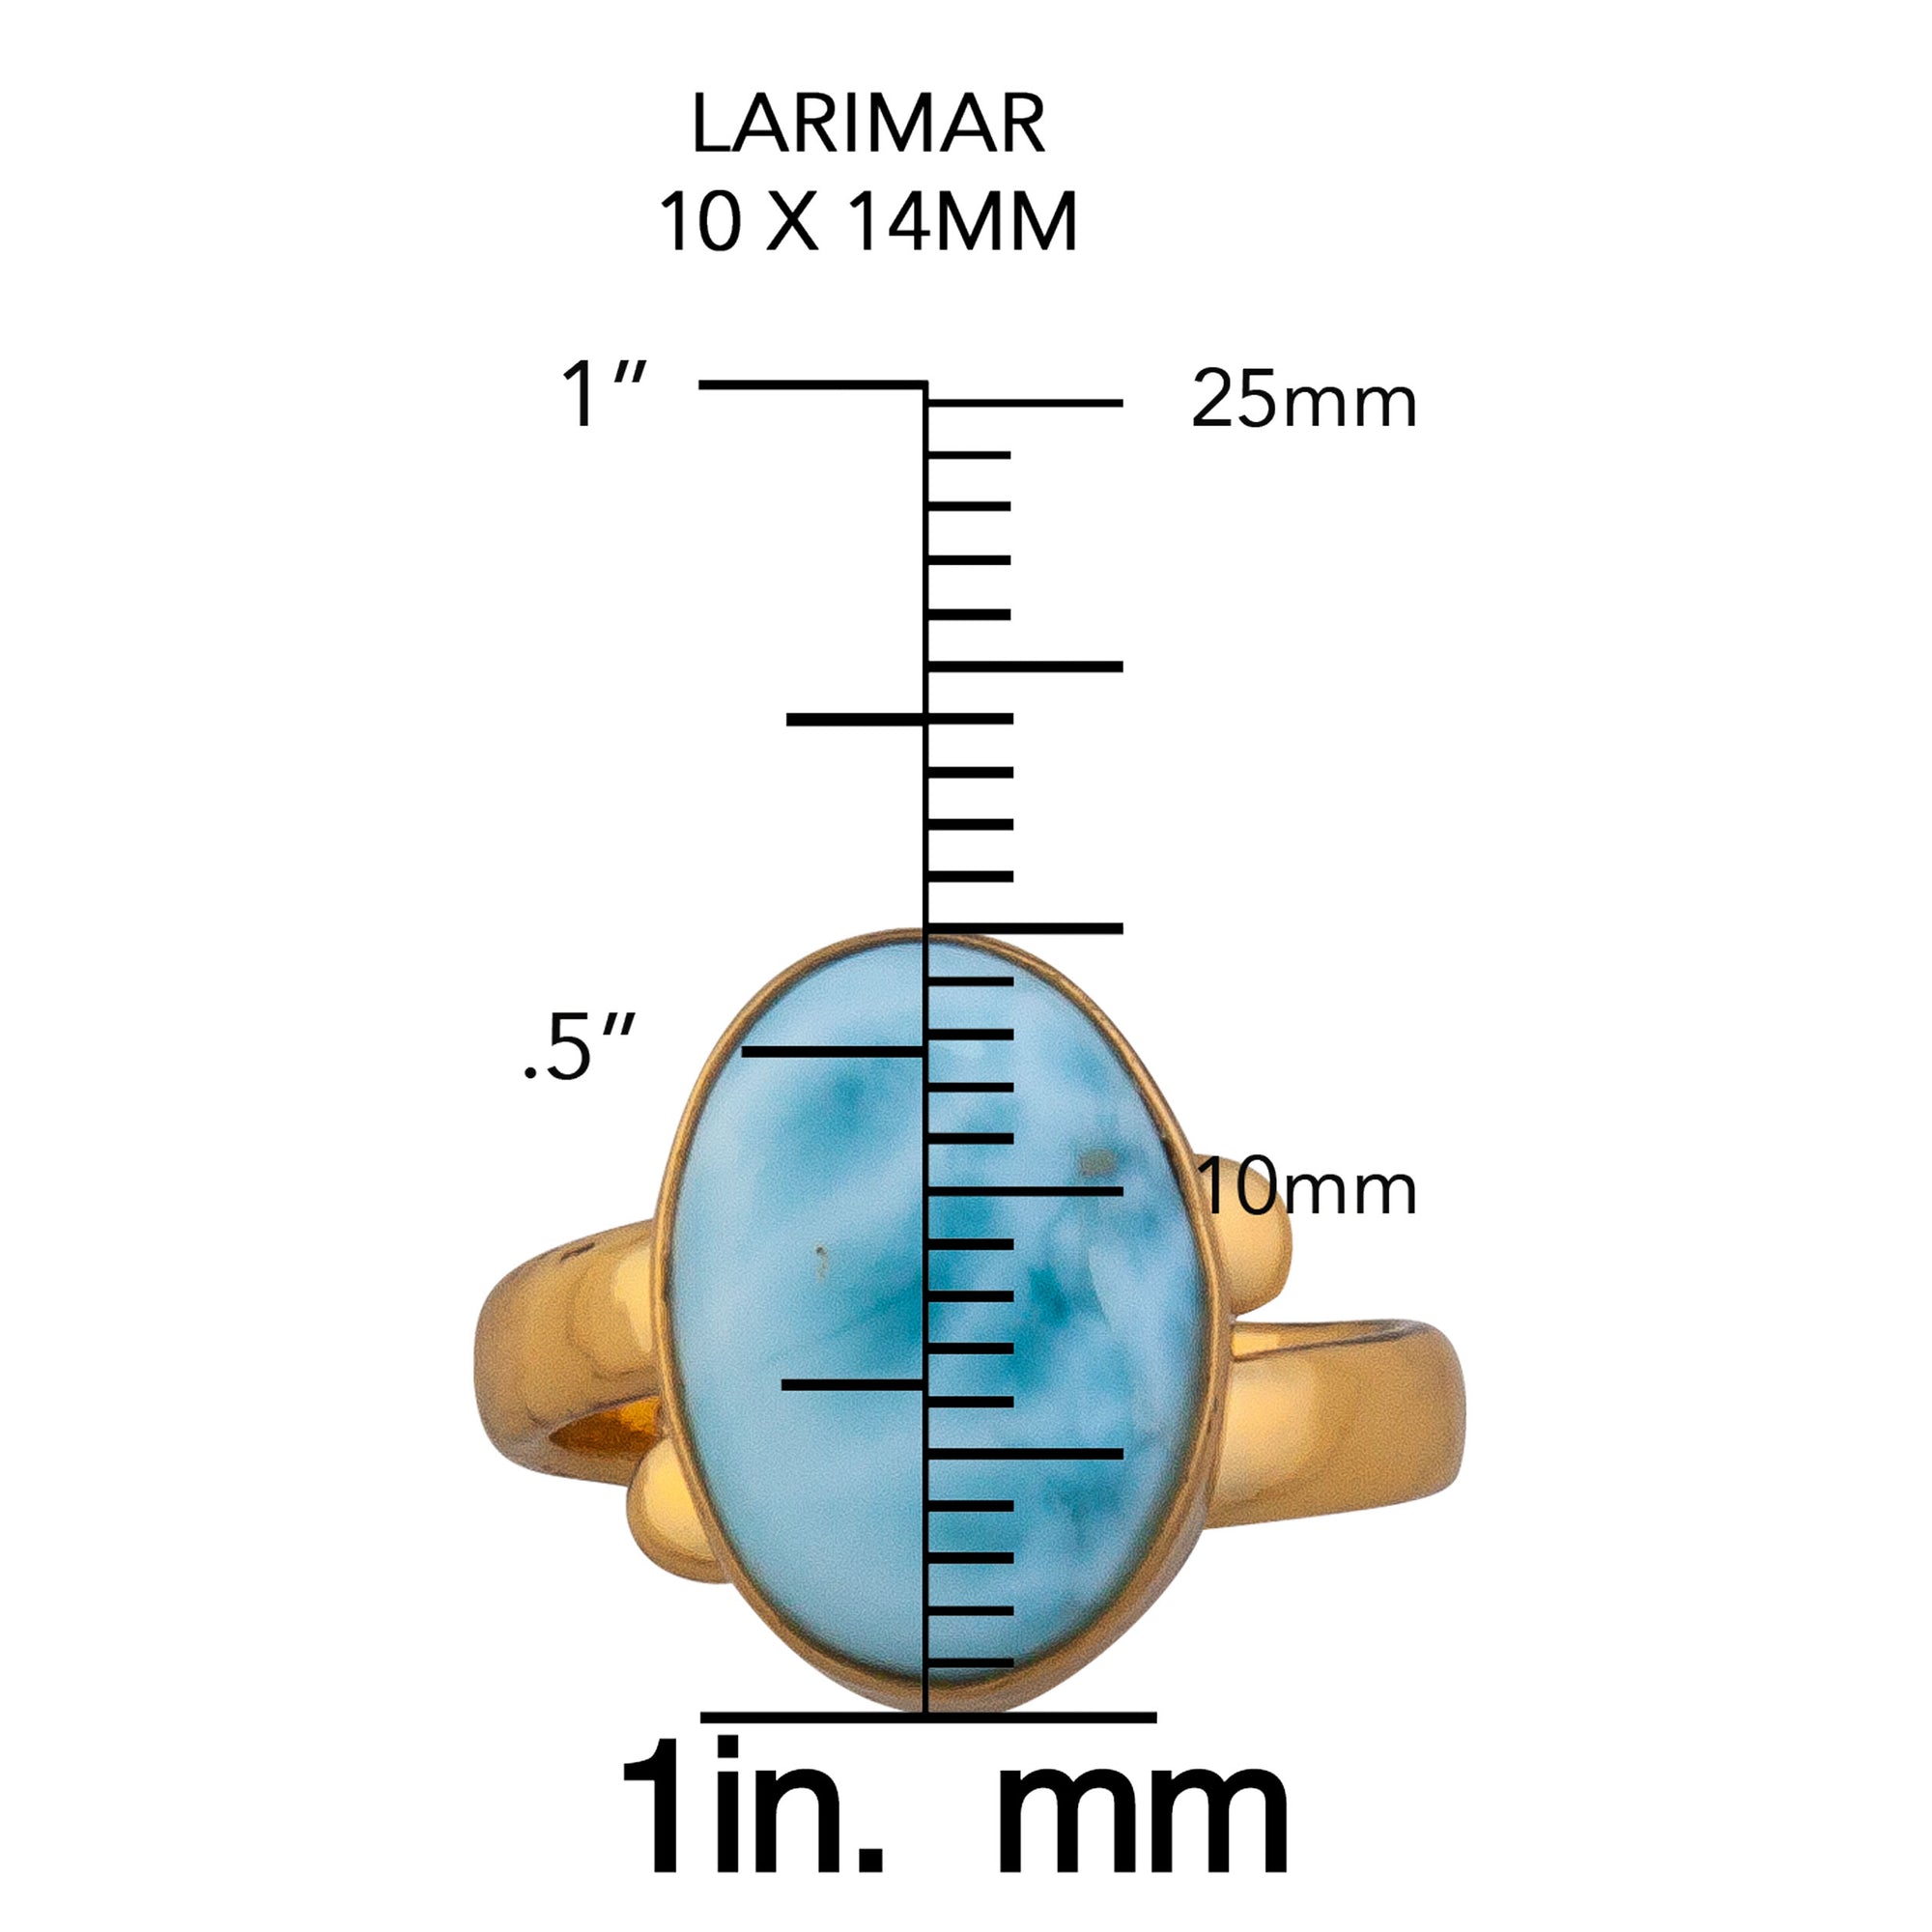 Alchemia Larimar Petite Adjustable Ring | Charles Albert Jewelry